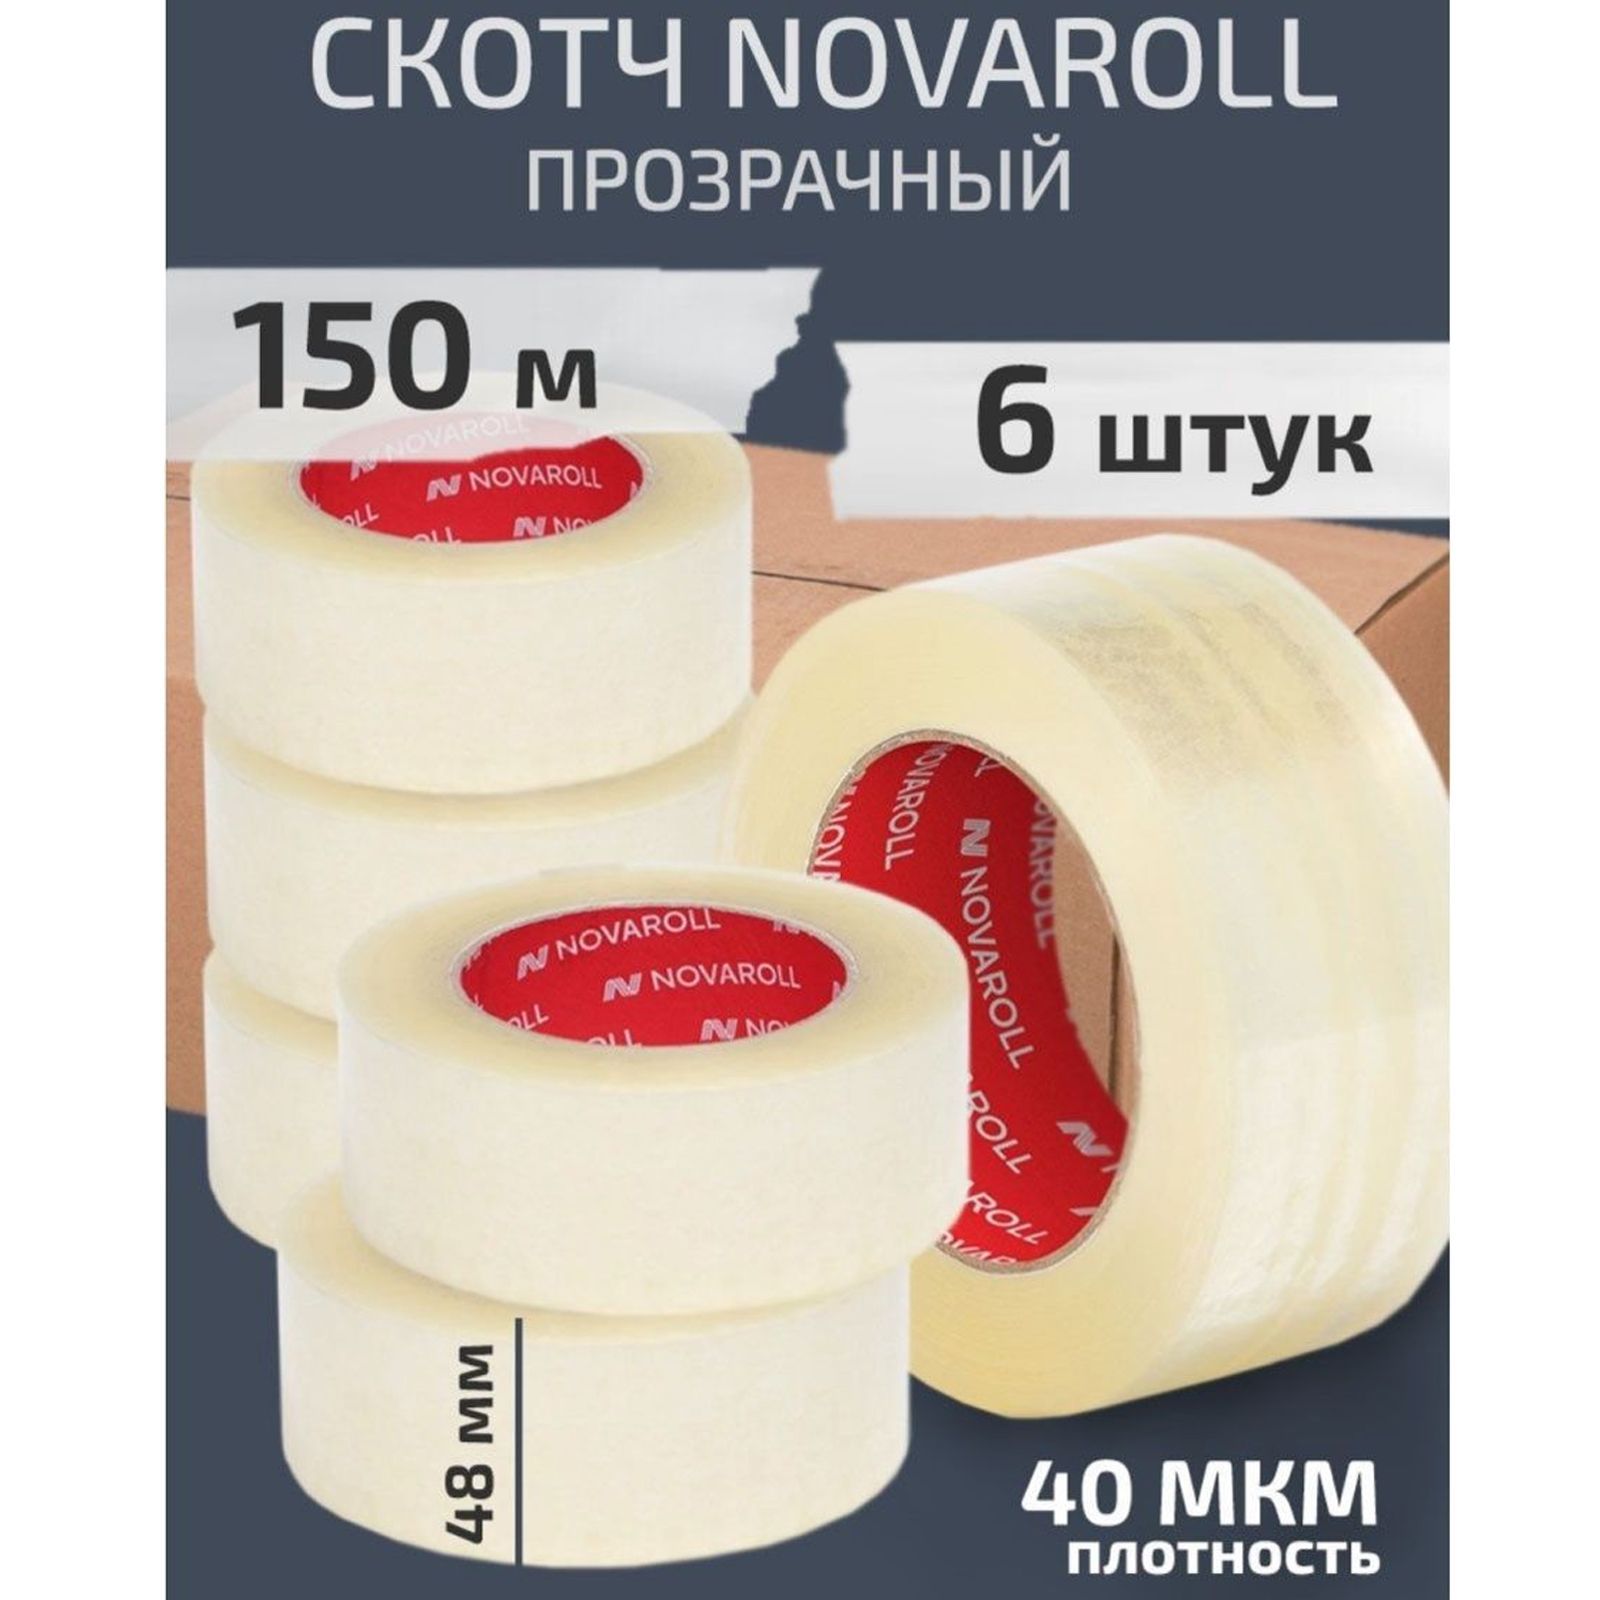 Купить скотч Novaroll прозрачный широкий прочный 150м х 48 мм, набор 6 штук, цены на Мегамаркет | Артикул: 600015021837